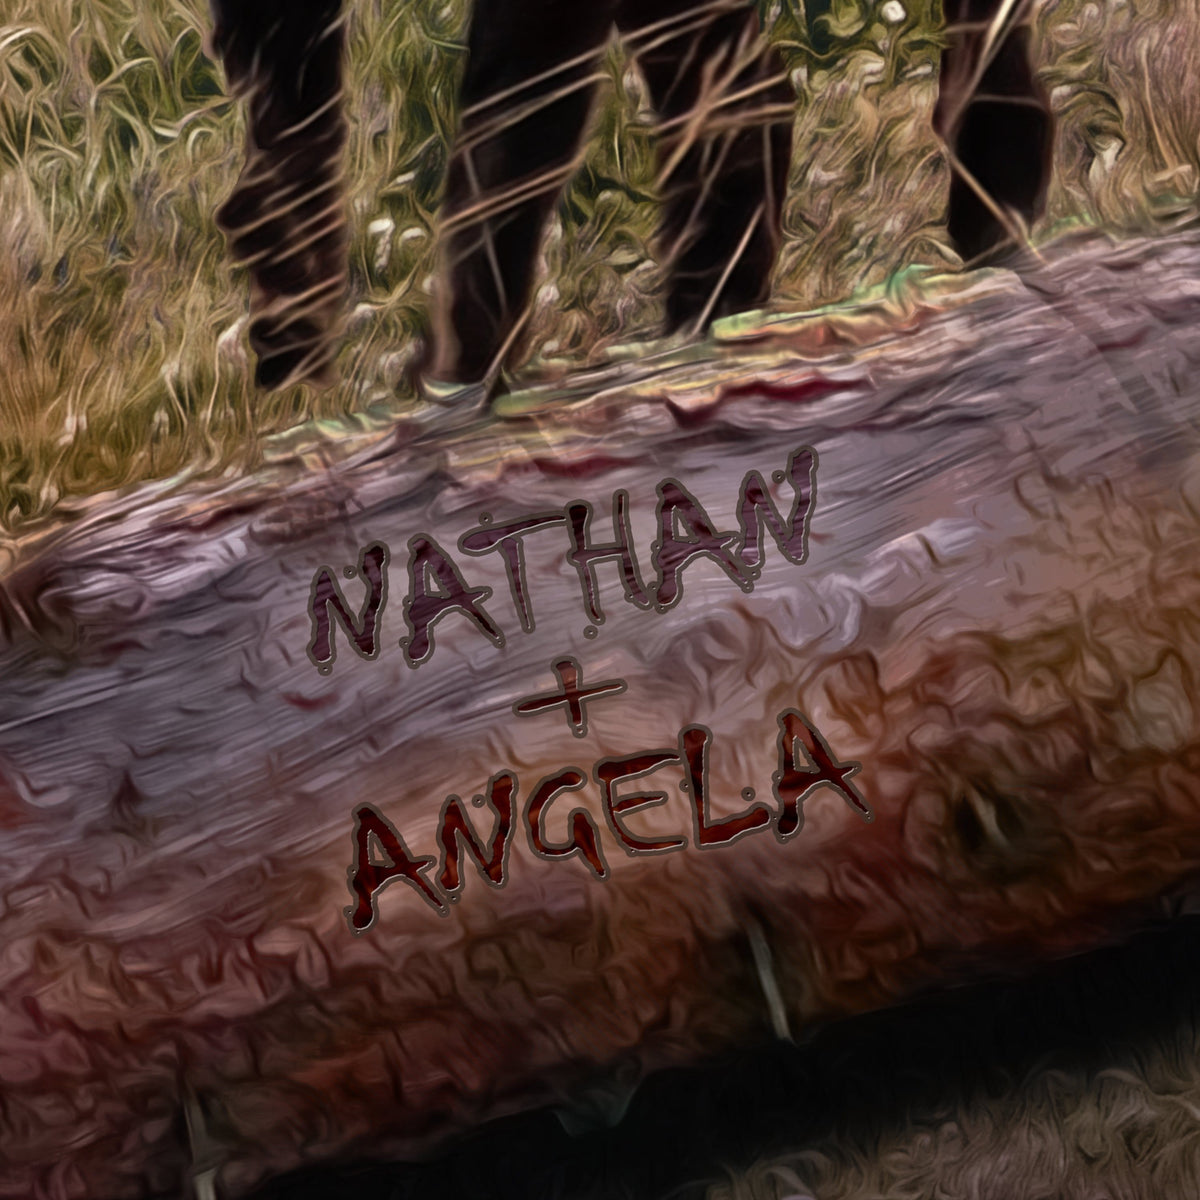 Customization Detail - Names carved on log